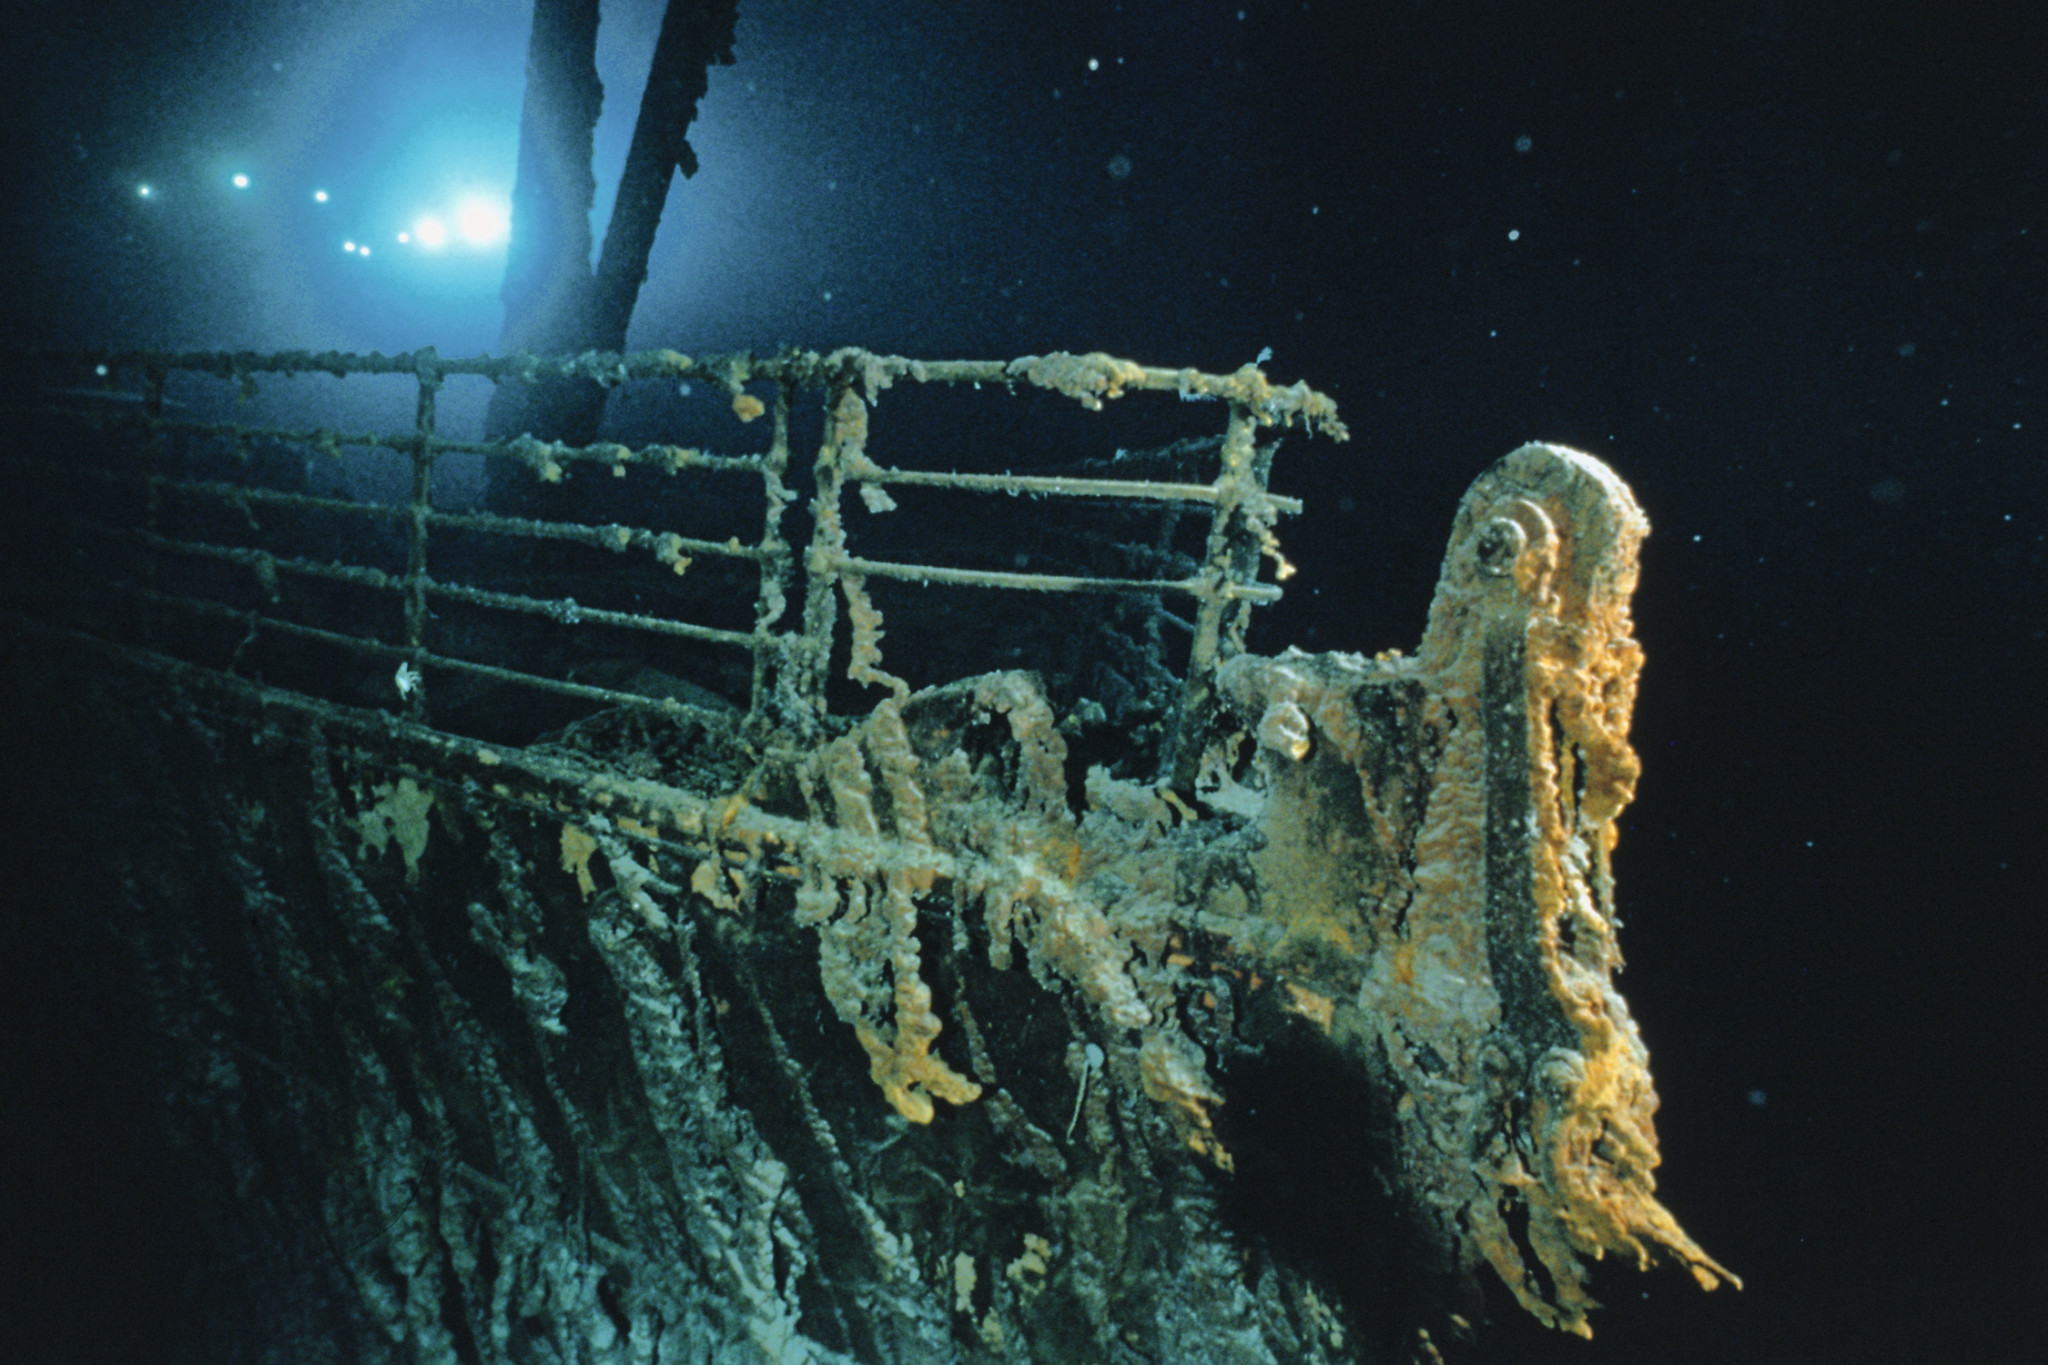 NatGeo - Titanic's bow and railing.